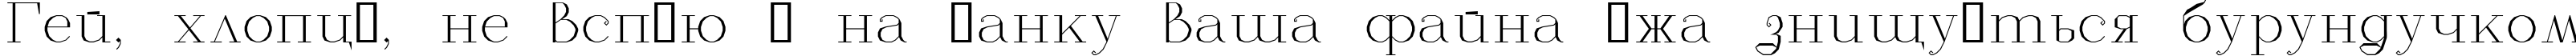 Пример написания шрифтом Complex текста на украинском